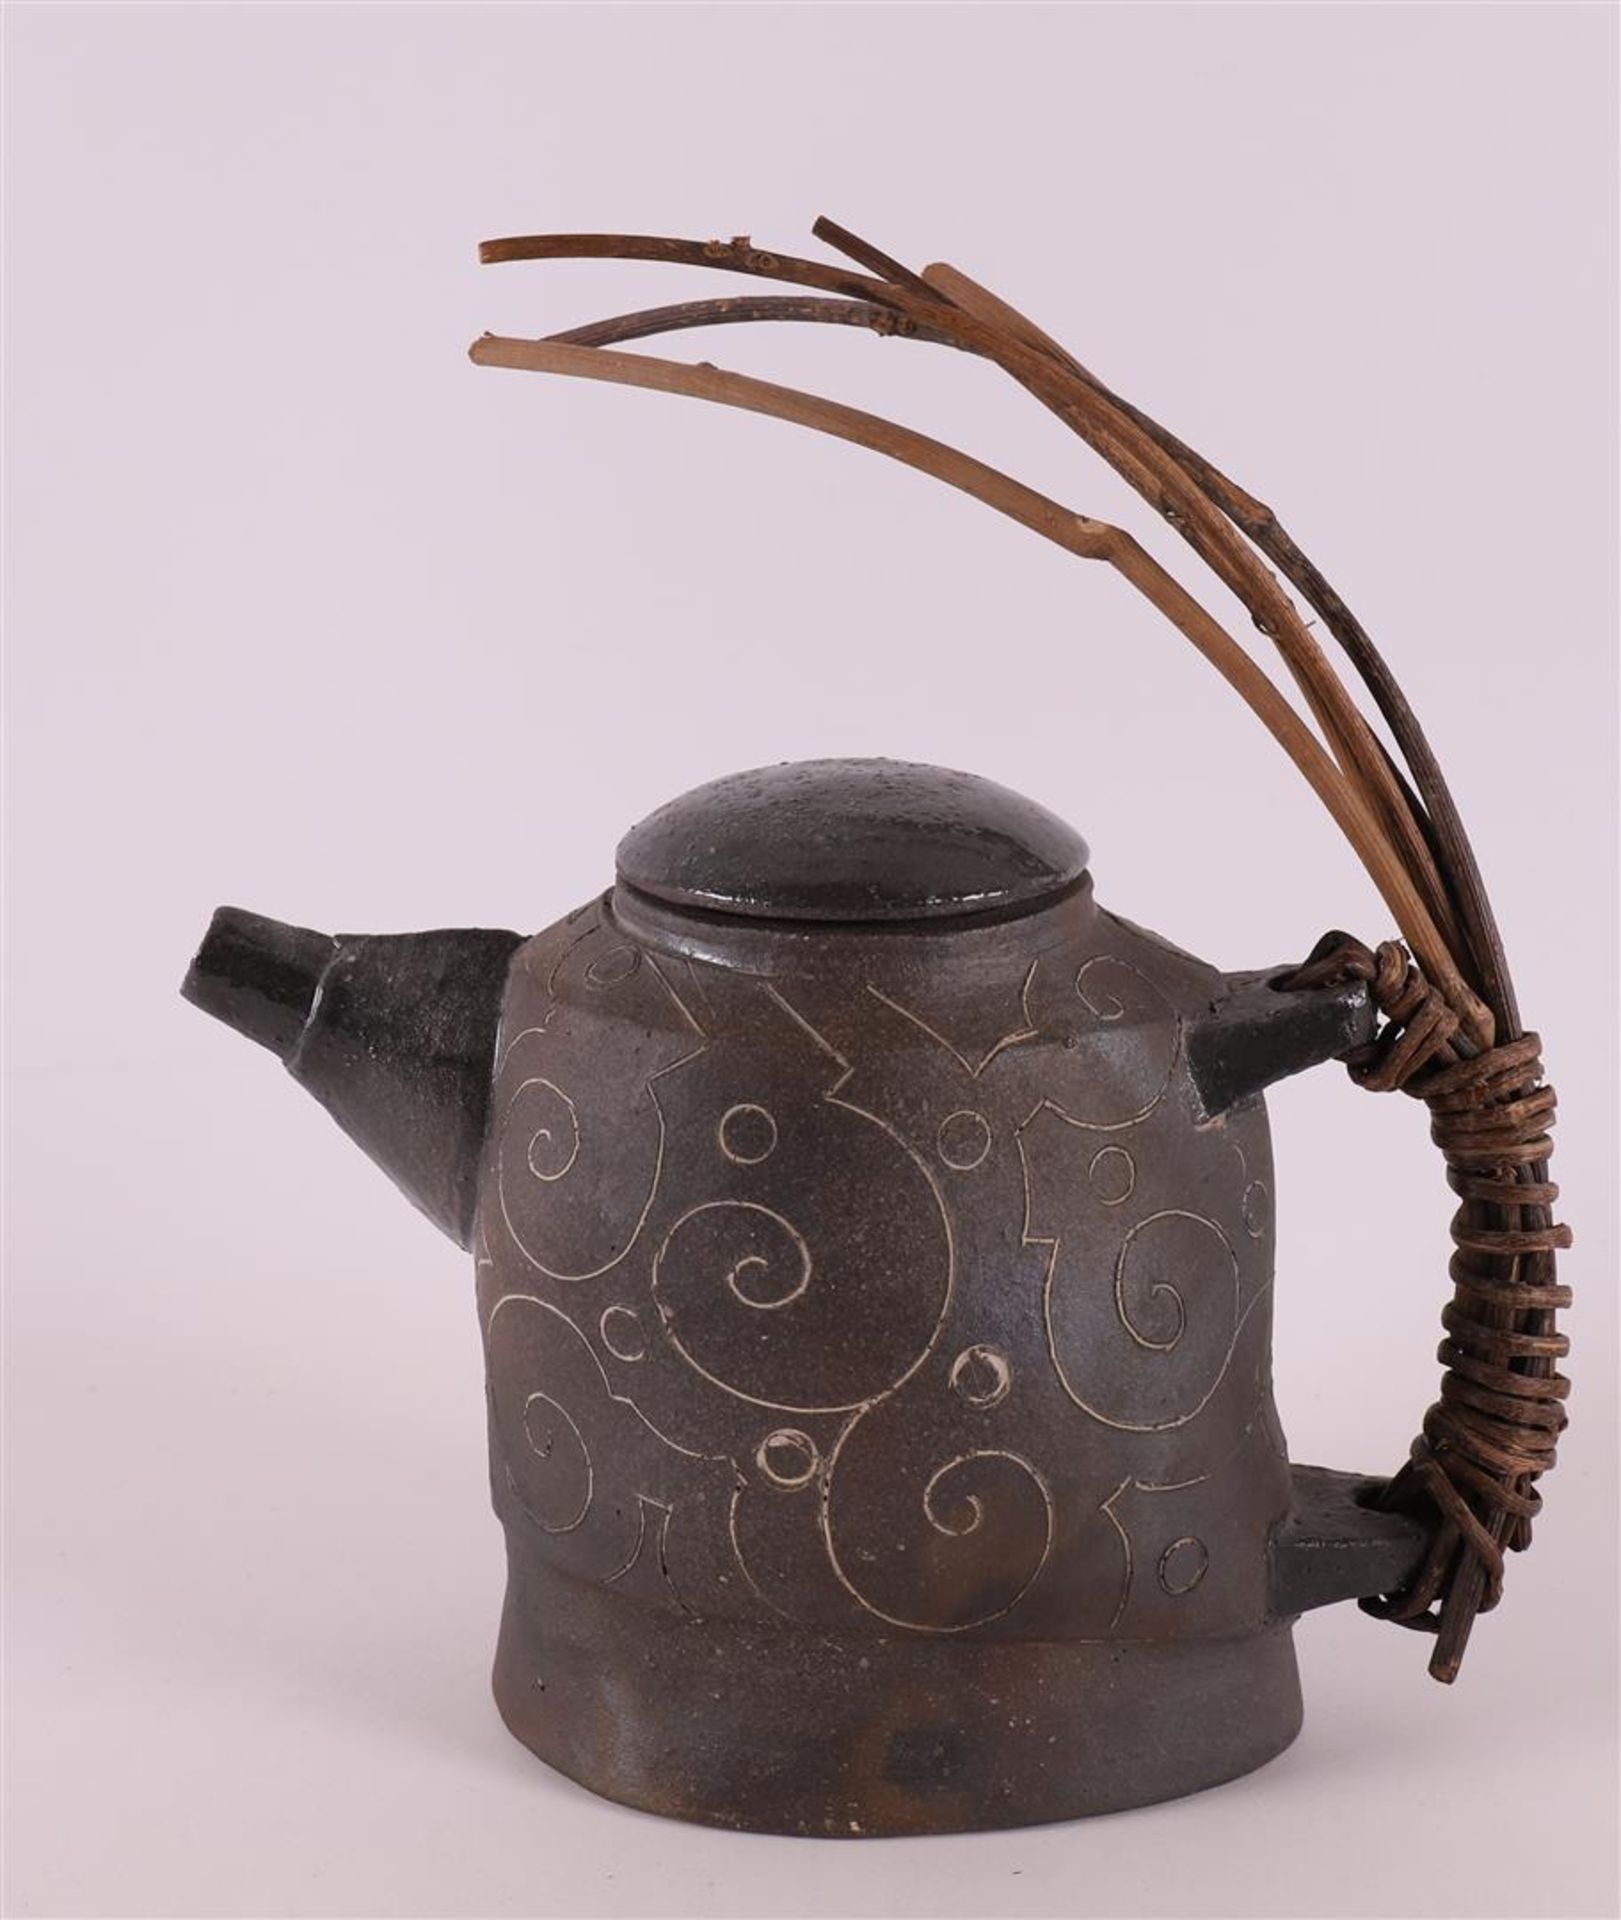 A gray ceramic teapot with braided wooden handle, collection Paul Mertz, h 24 cm. - Bild 2 aus 6